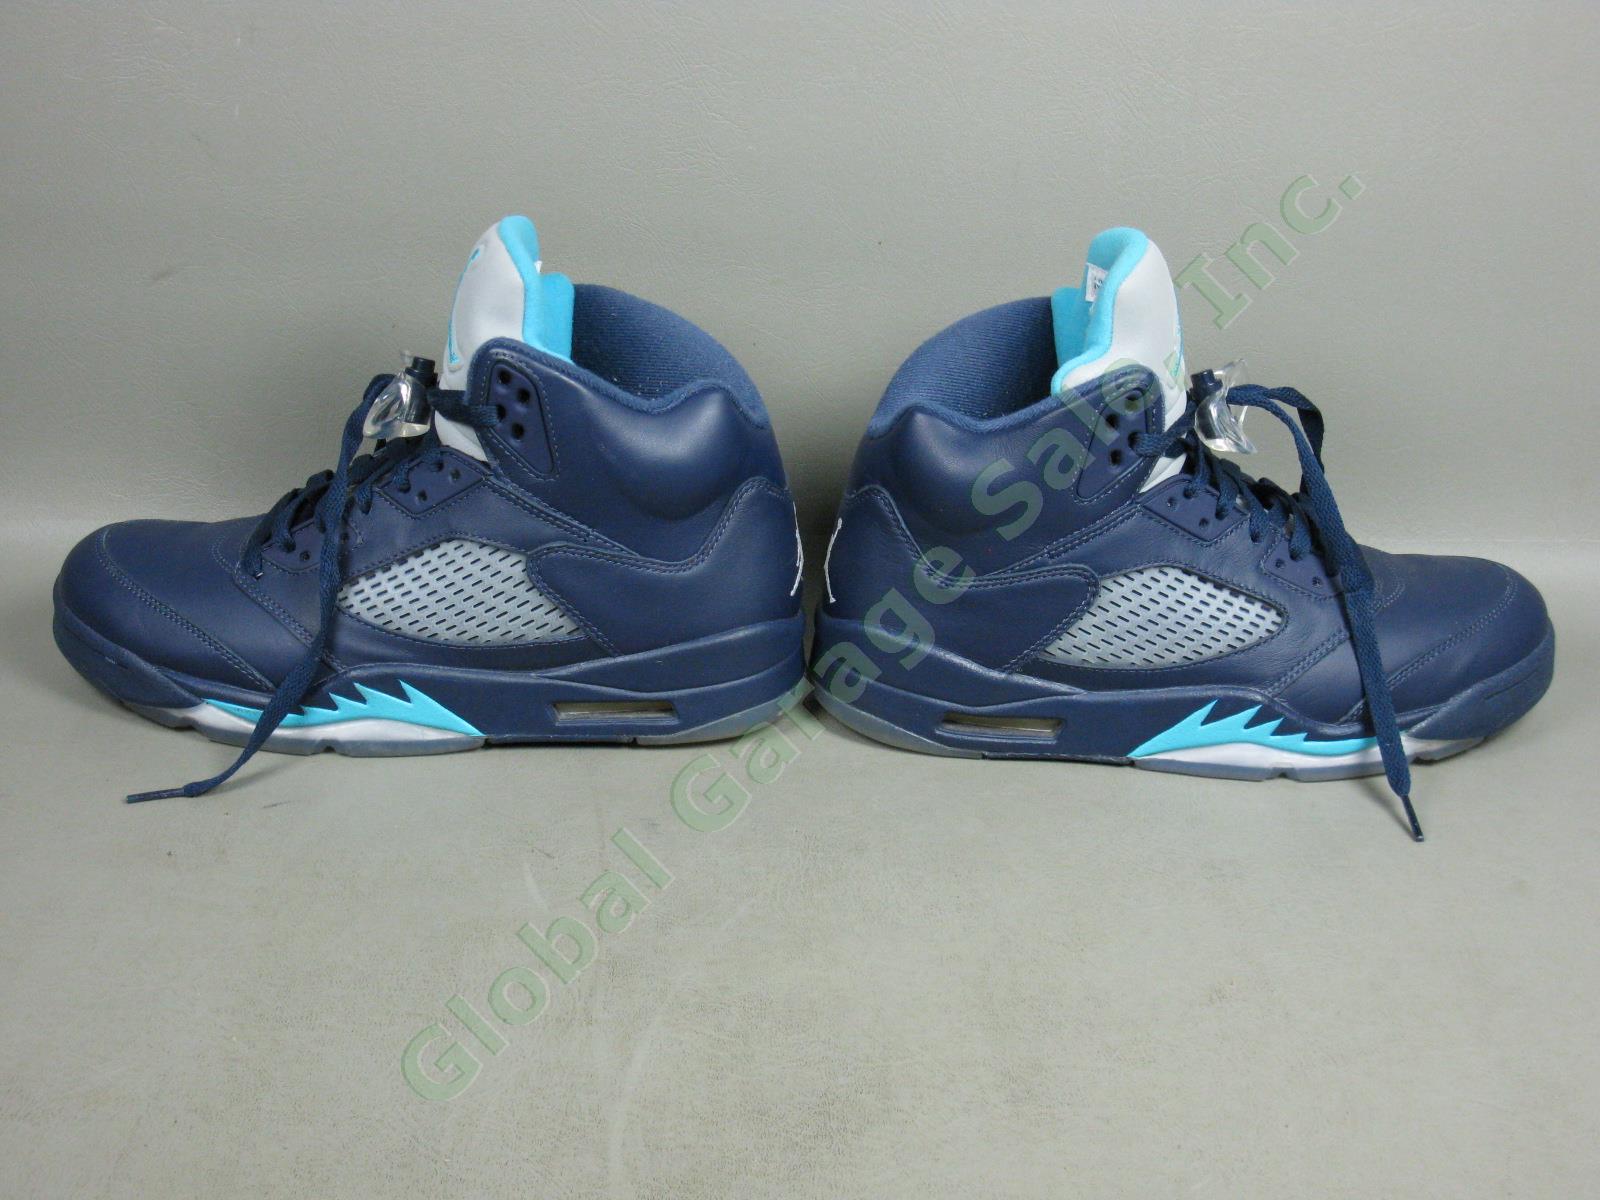 Nike Air Jordan 5 V Retro Hornets Shoes Midnight Navy Blue White 136027-405 Sz 9 4